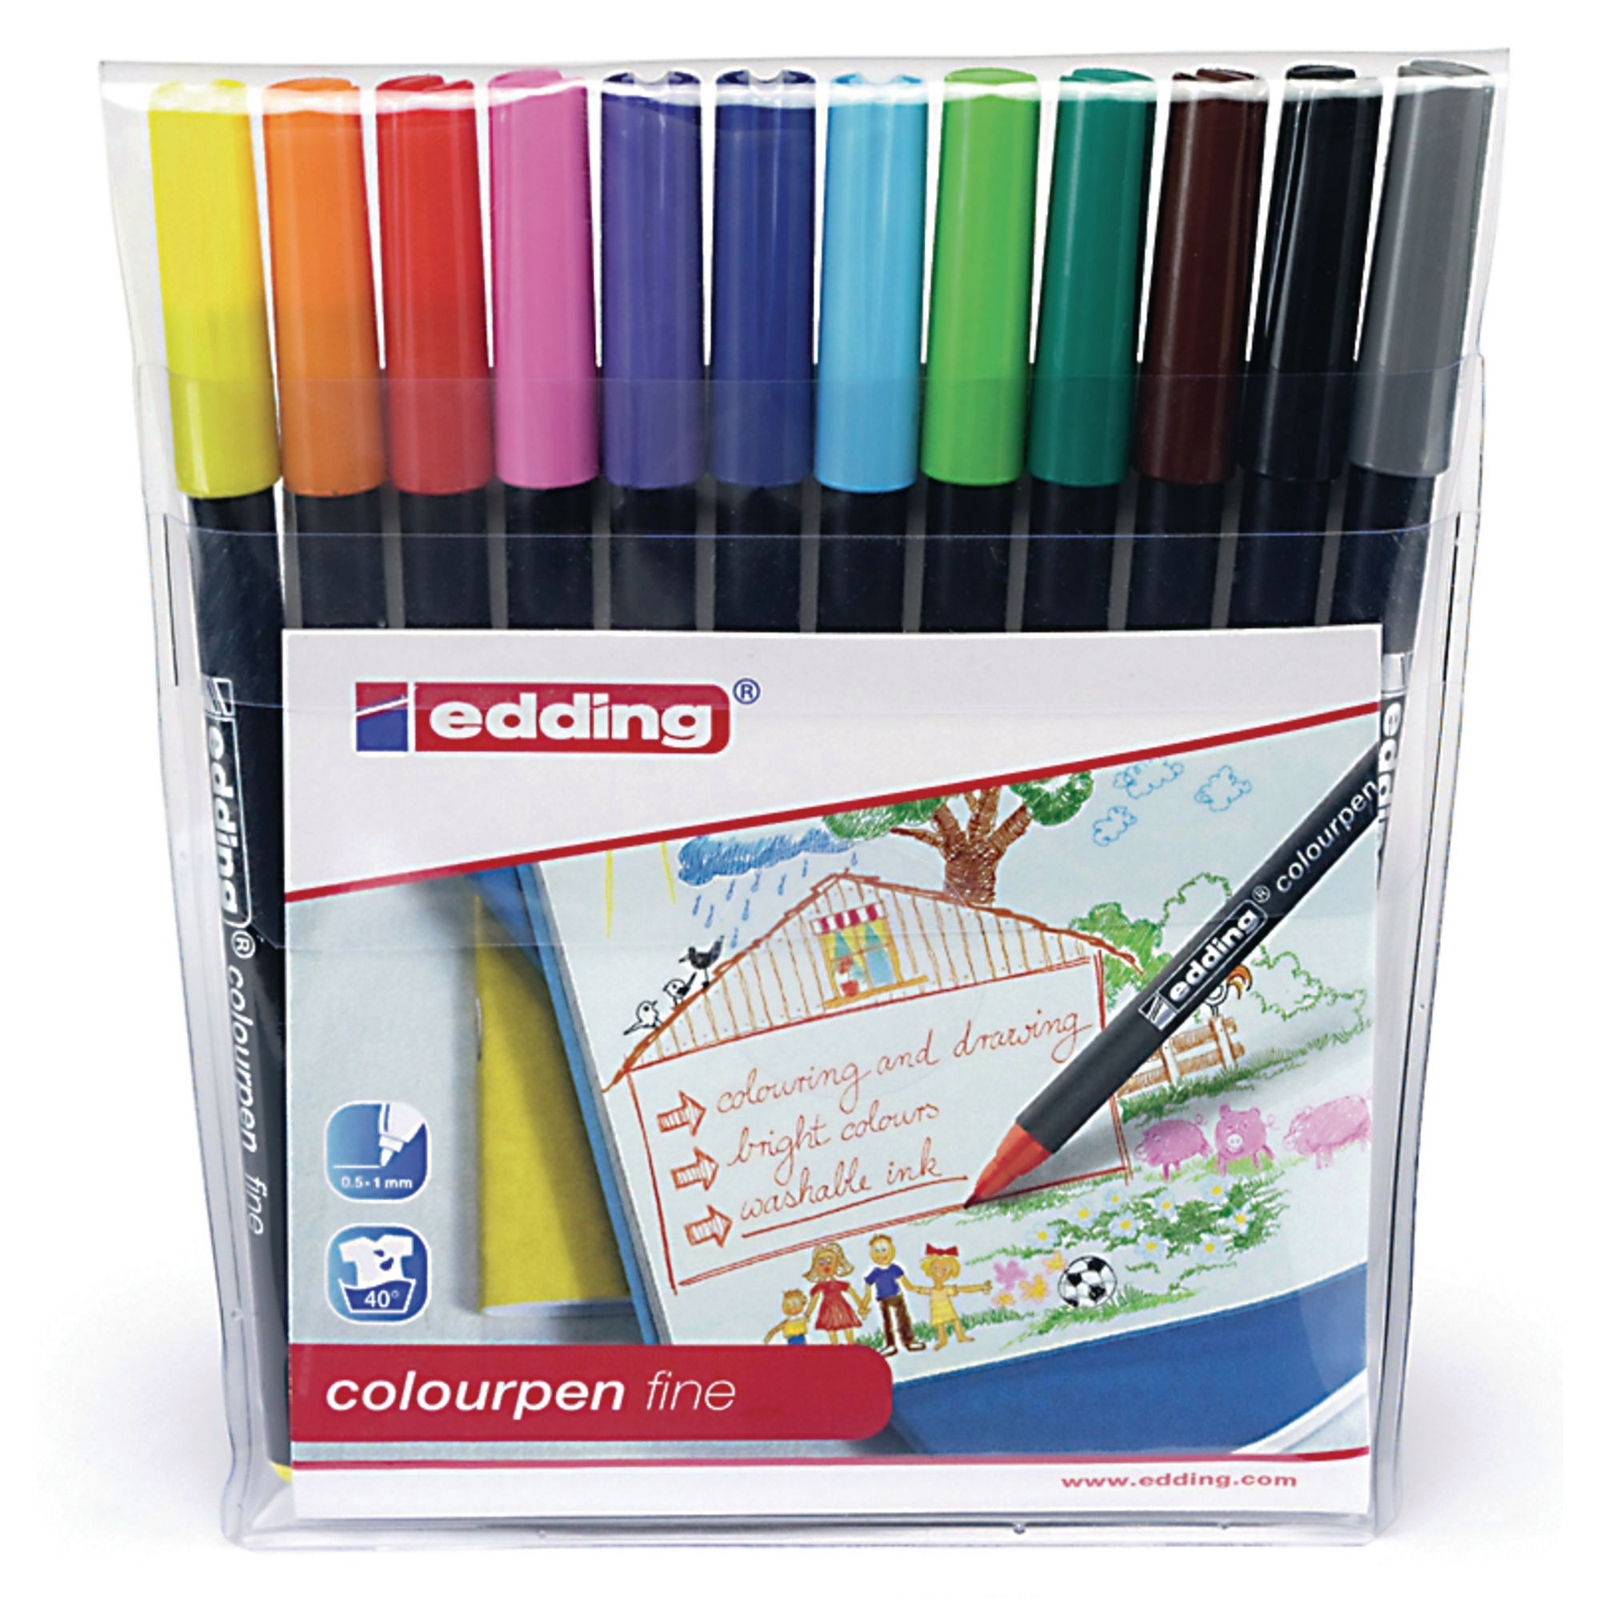 Edding Colourpen Fine - Assorted - Pack of 12